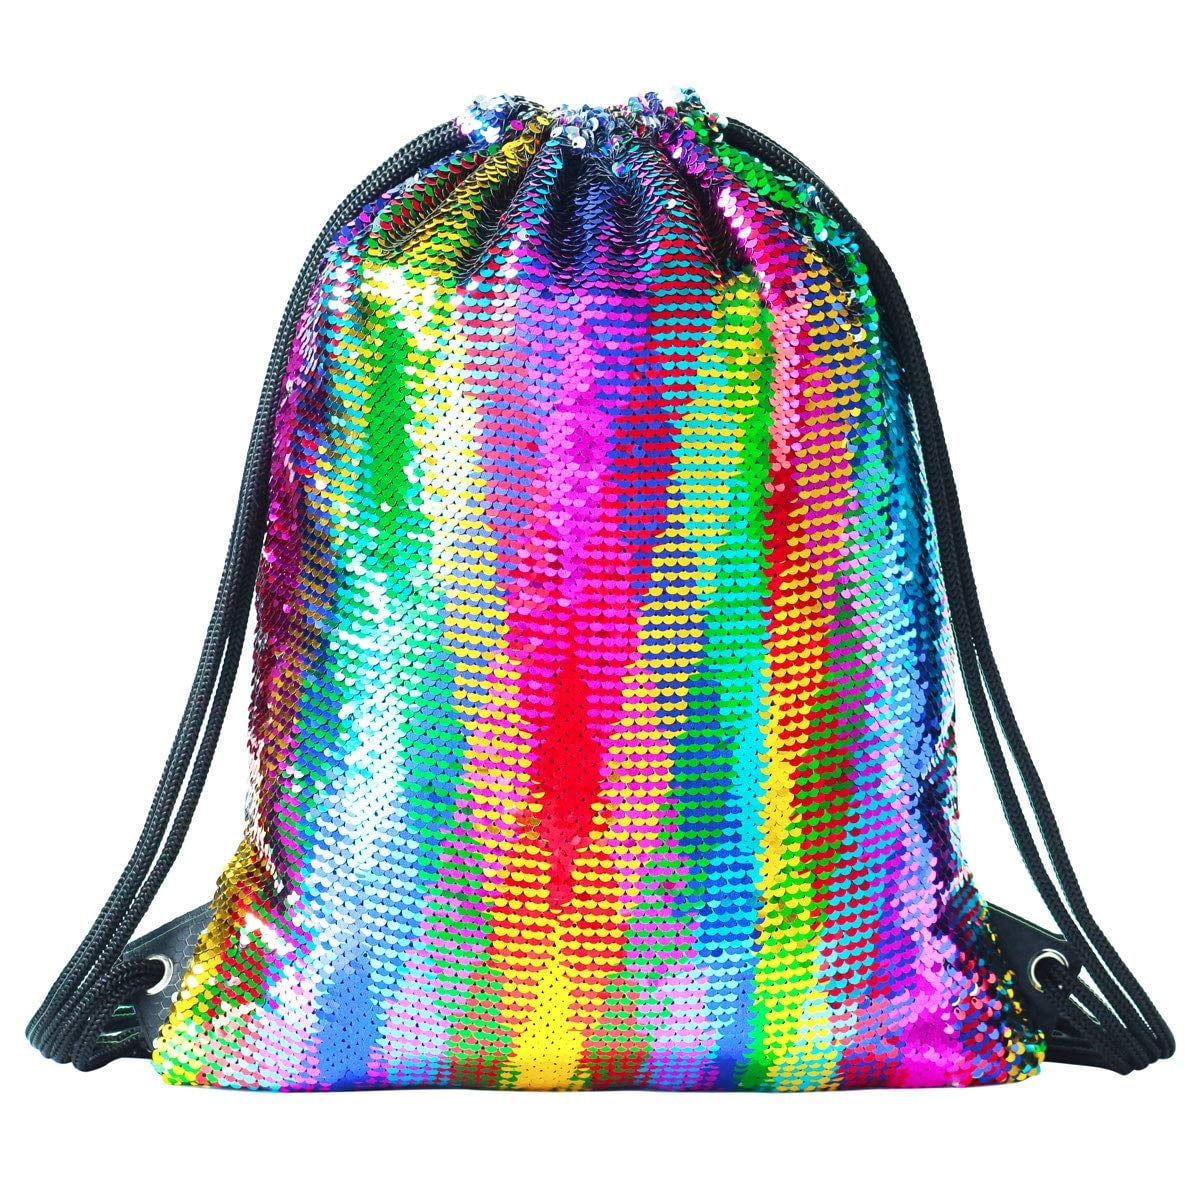 bnwt New F+F girls shiny rainbow glittery drawstring bag school PE etc 